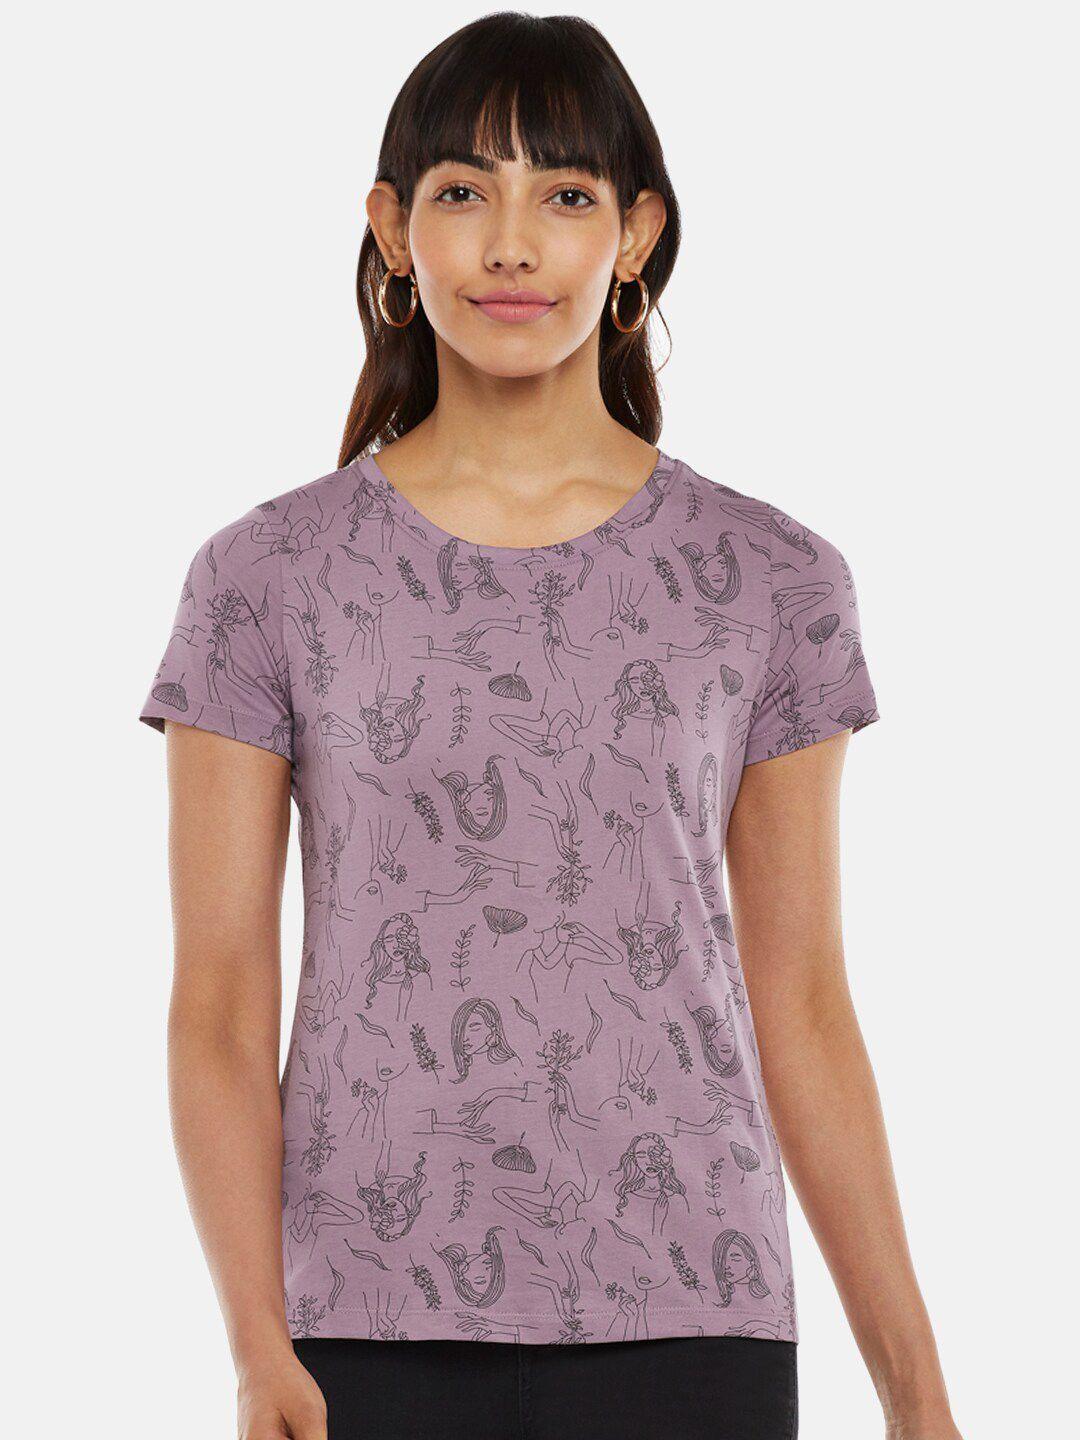 honey by pantaloons women lavender printed t-shirt